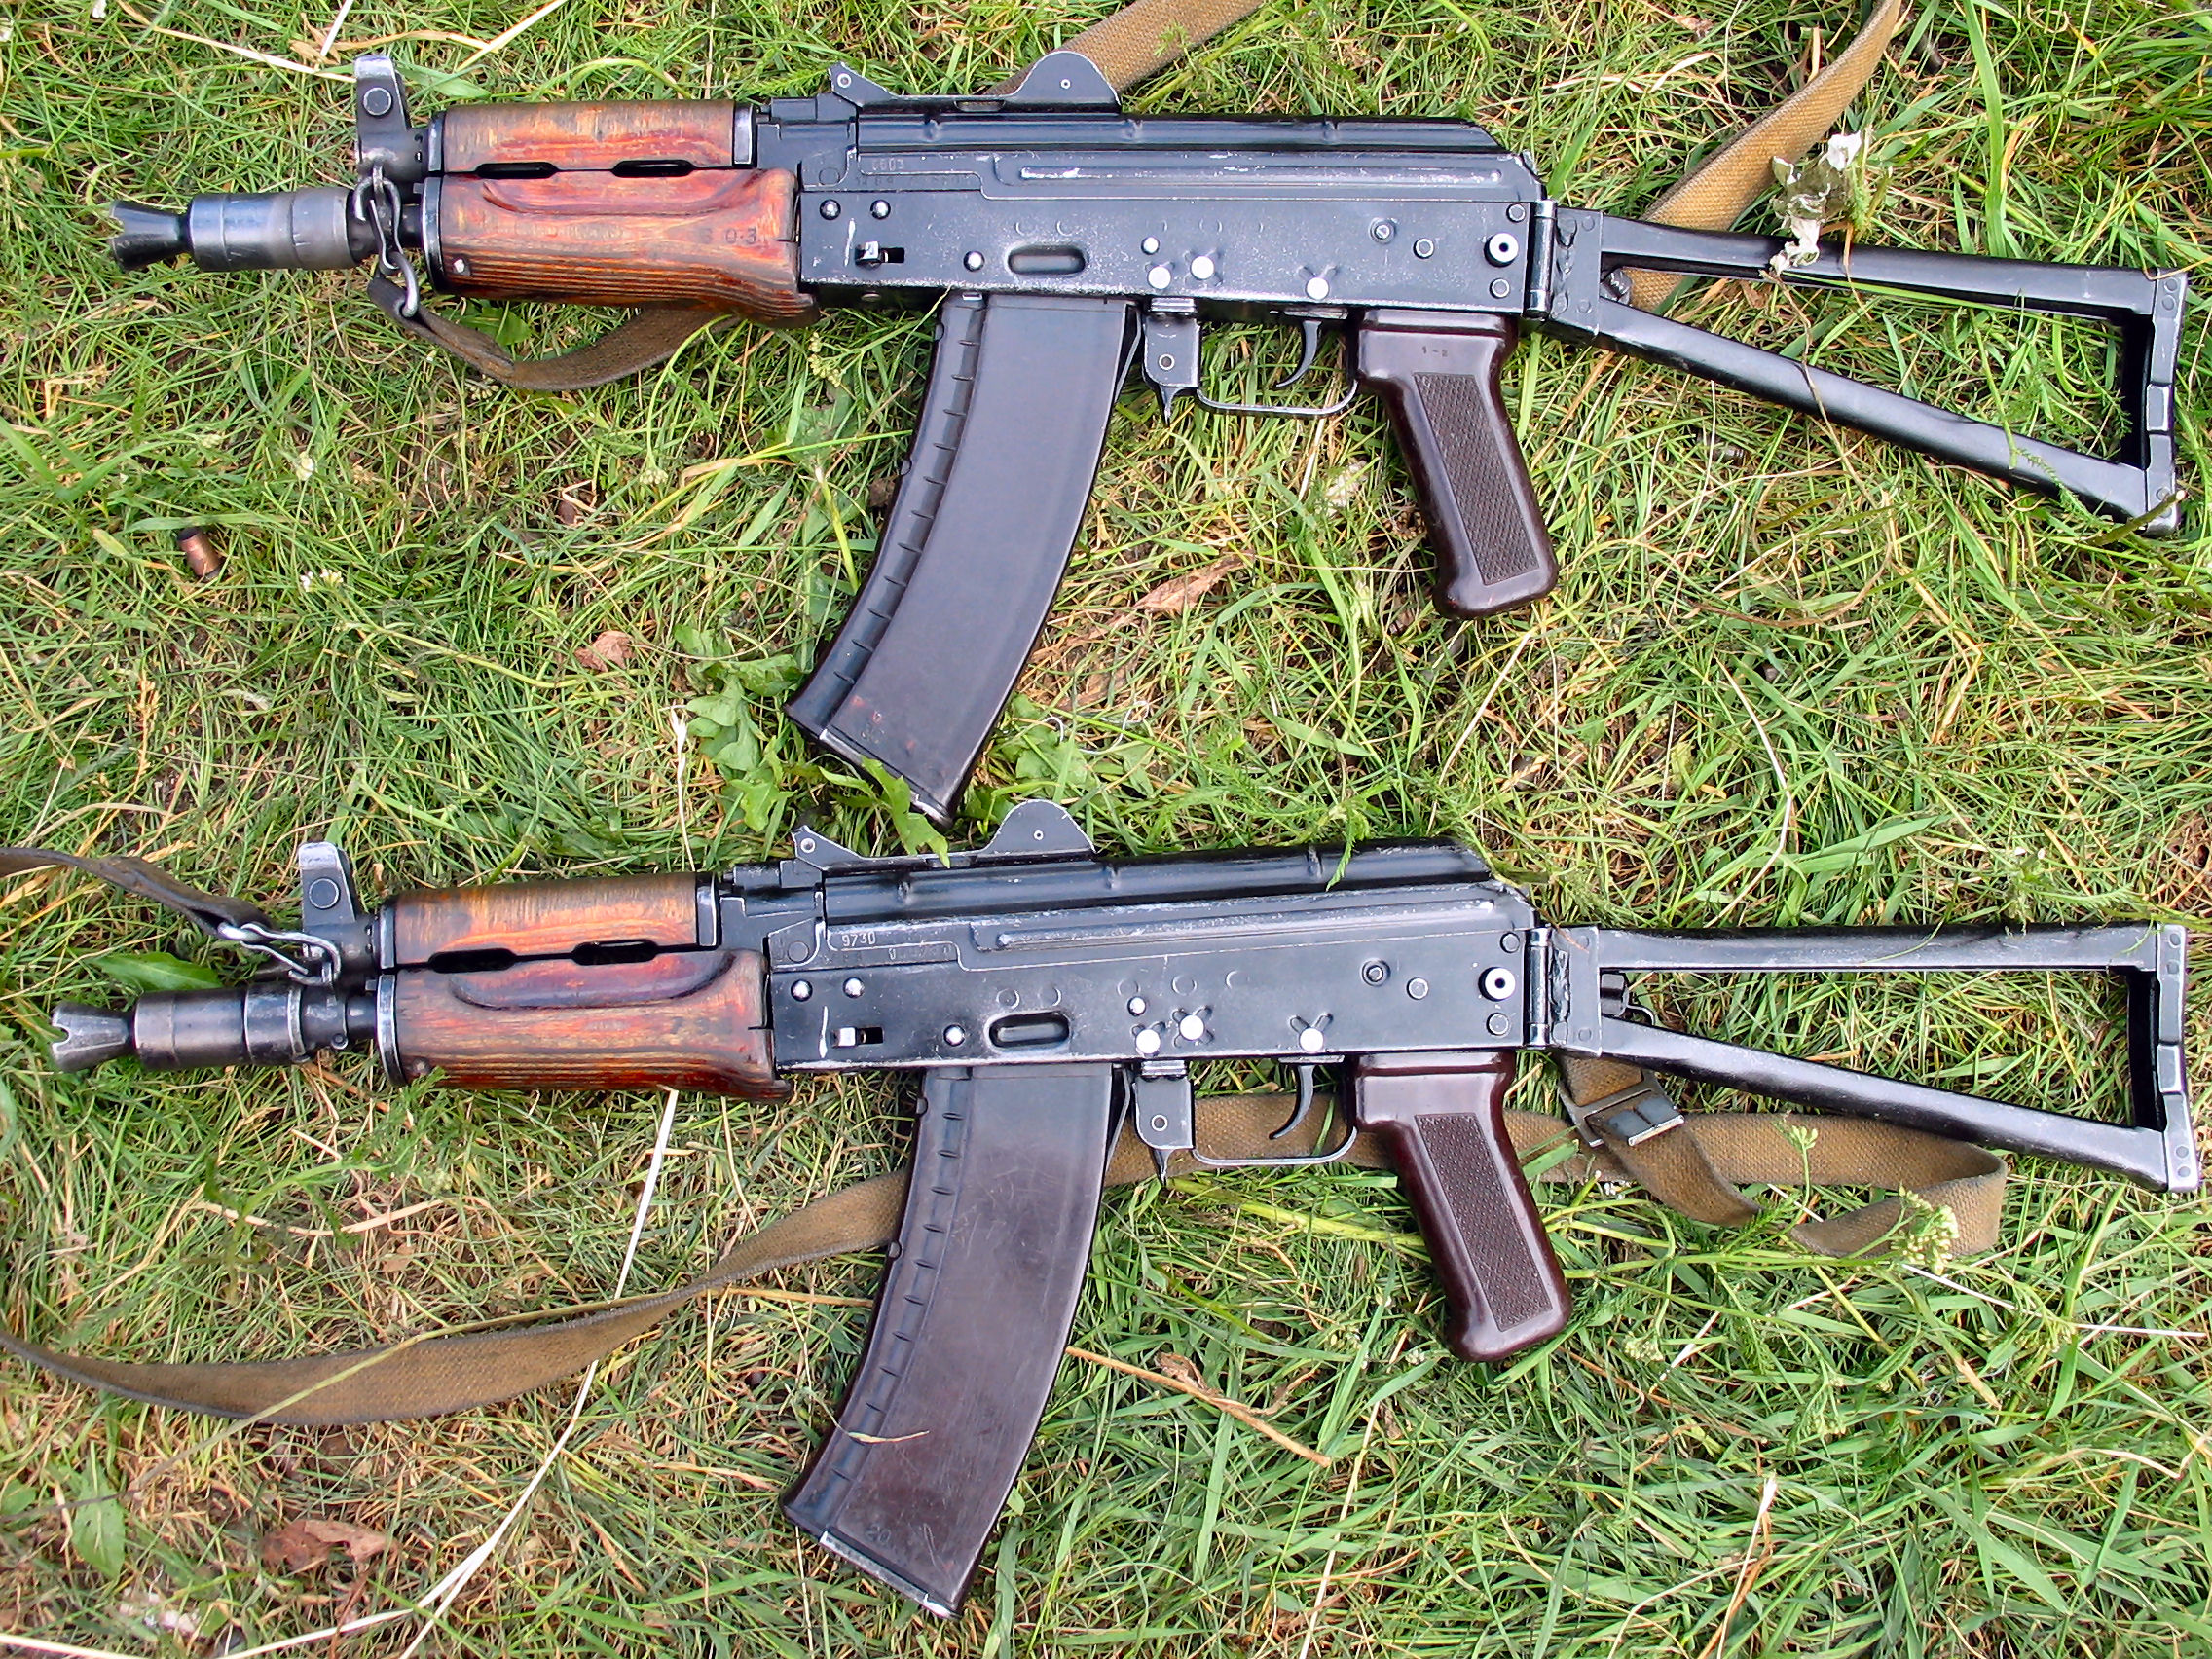 AKS-74U Krink DIY (Sort of) Build: Obtaining the Parts Kit